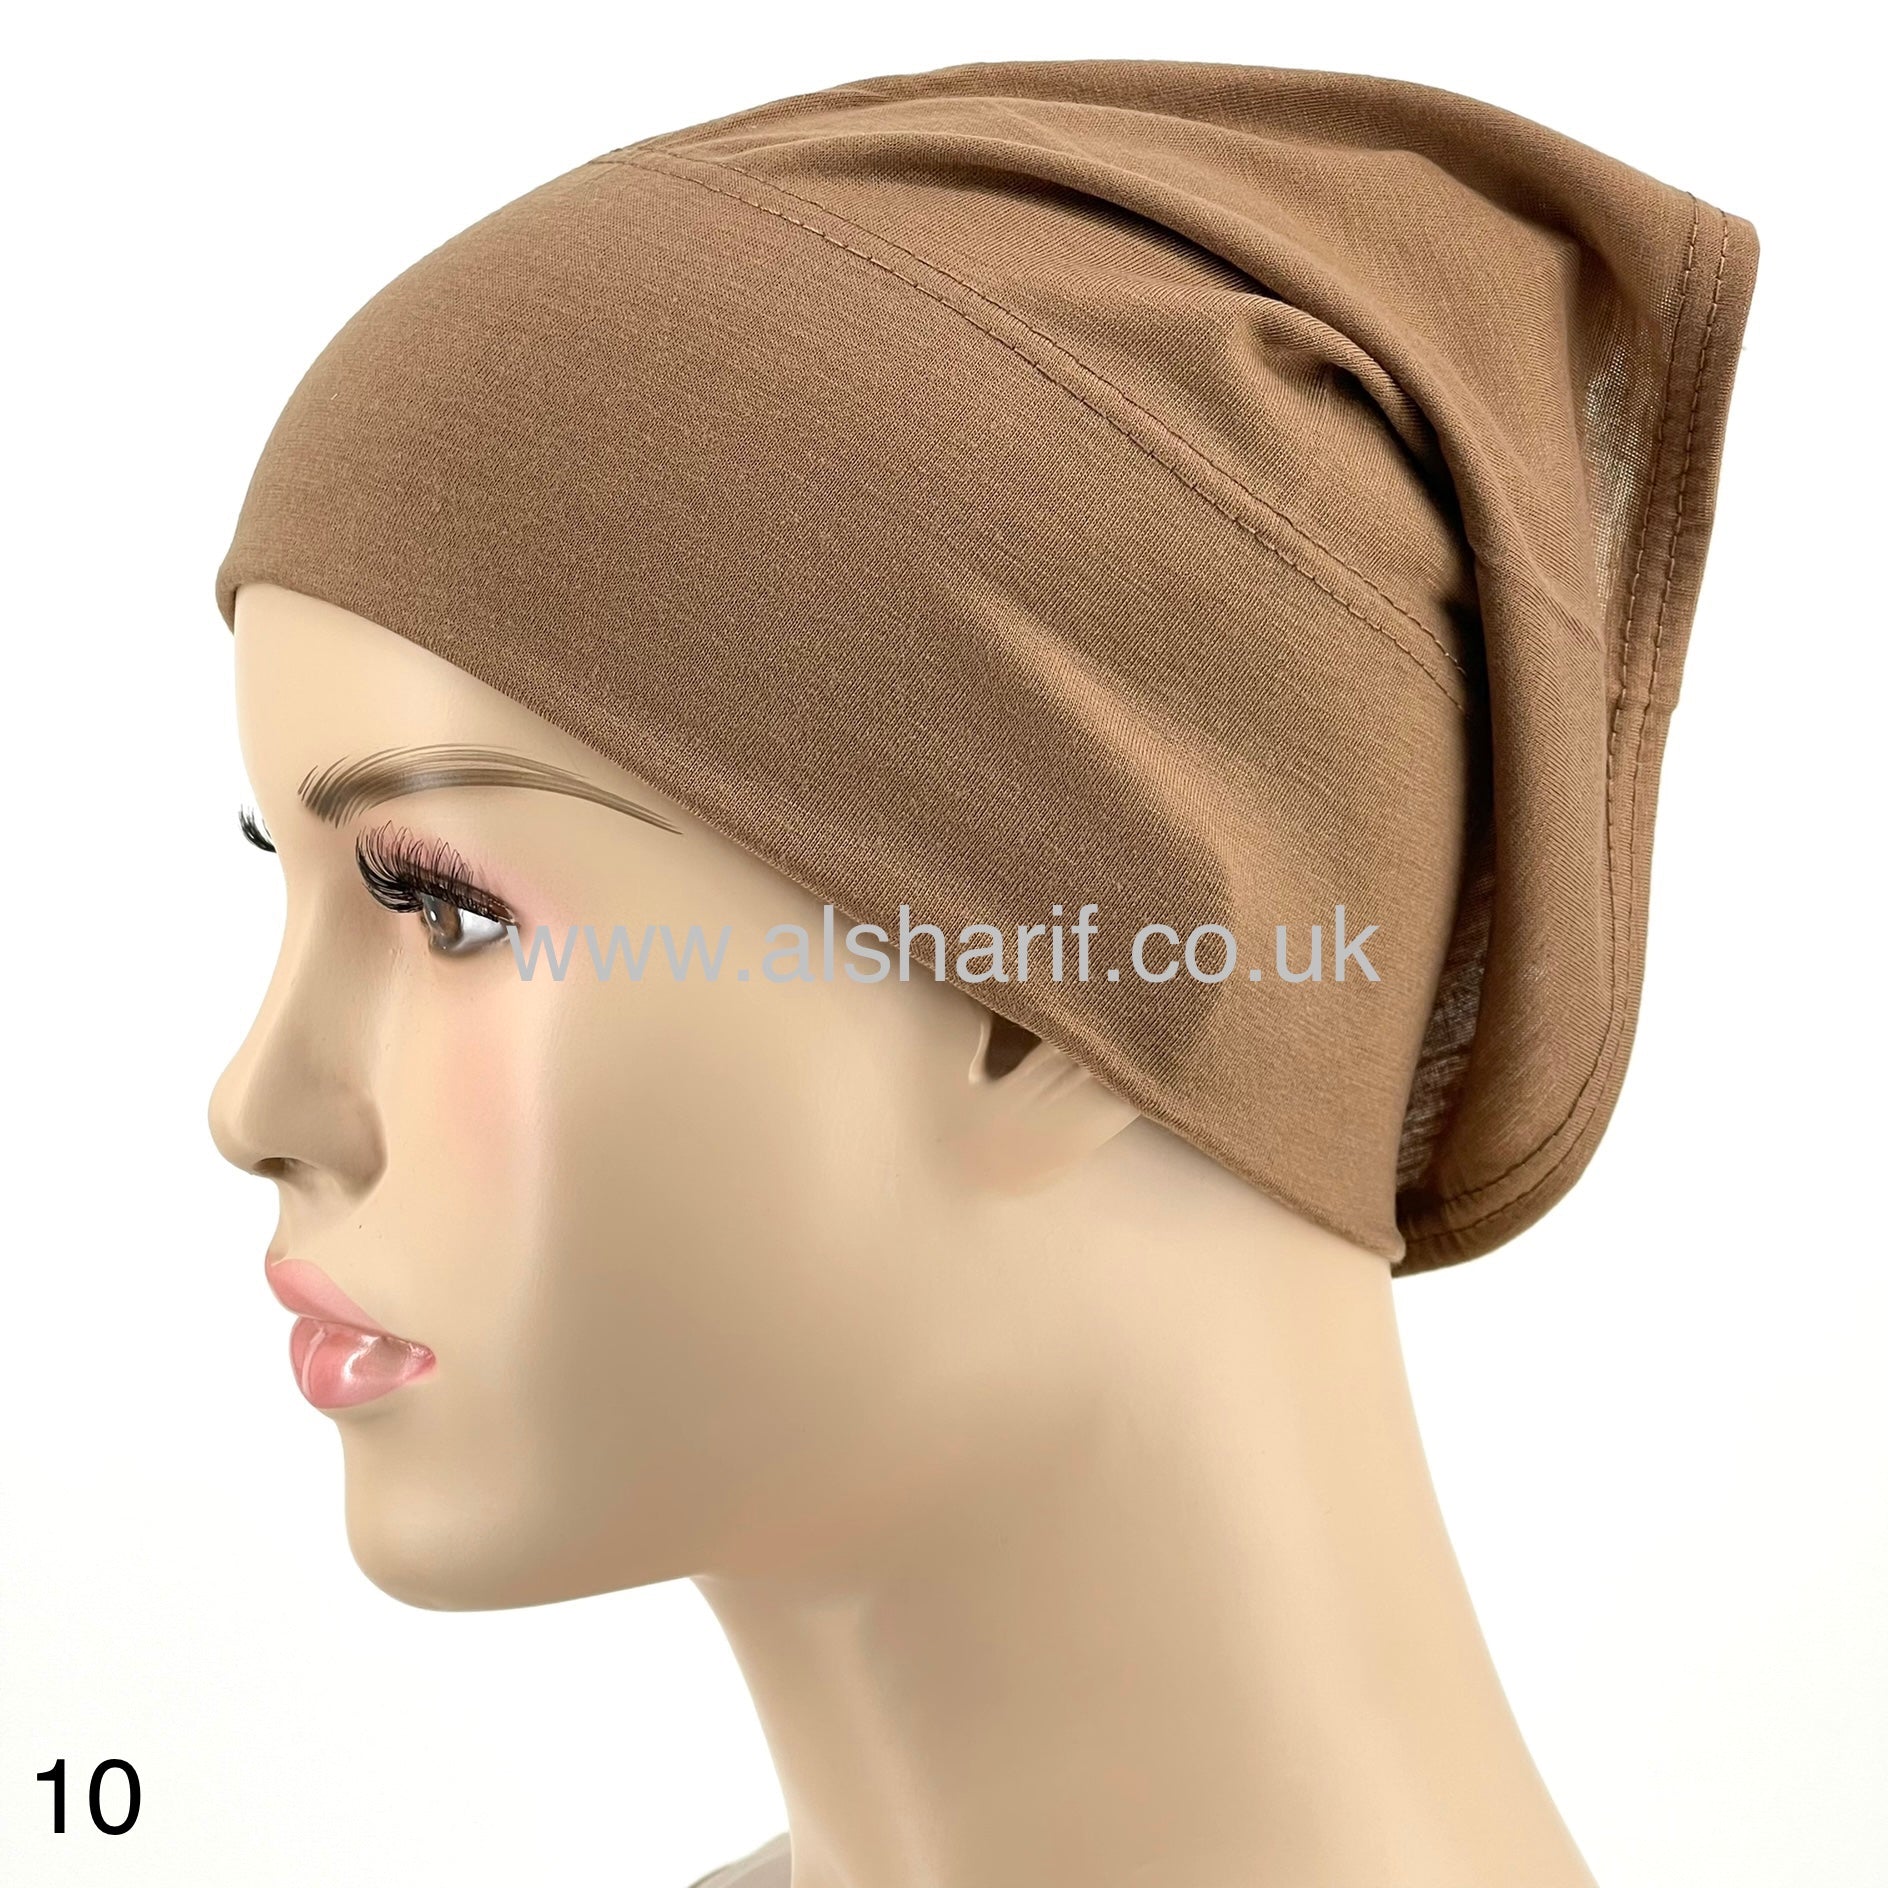 Under Hijab Tube Bonnet Cap #10